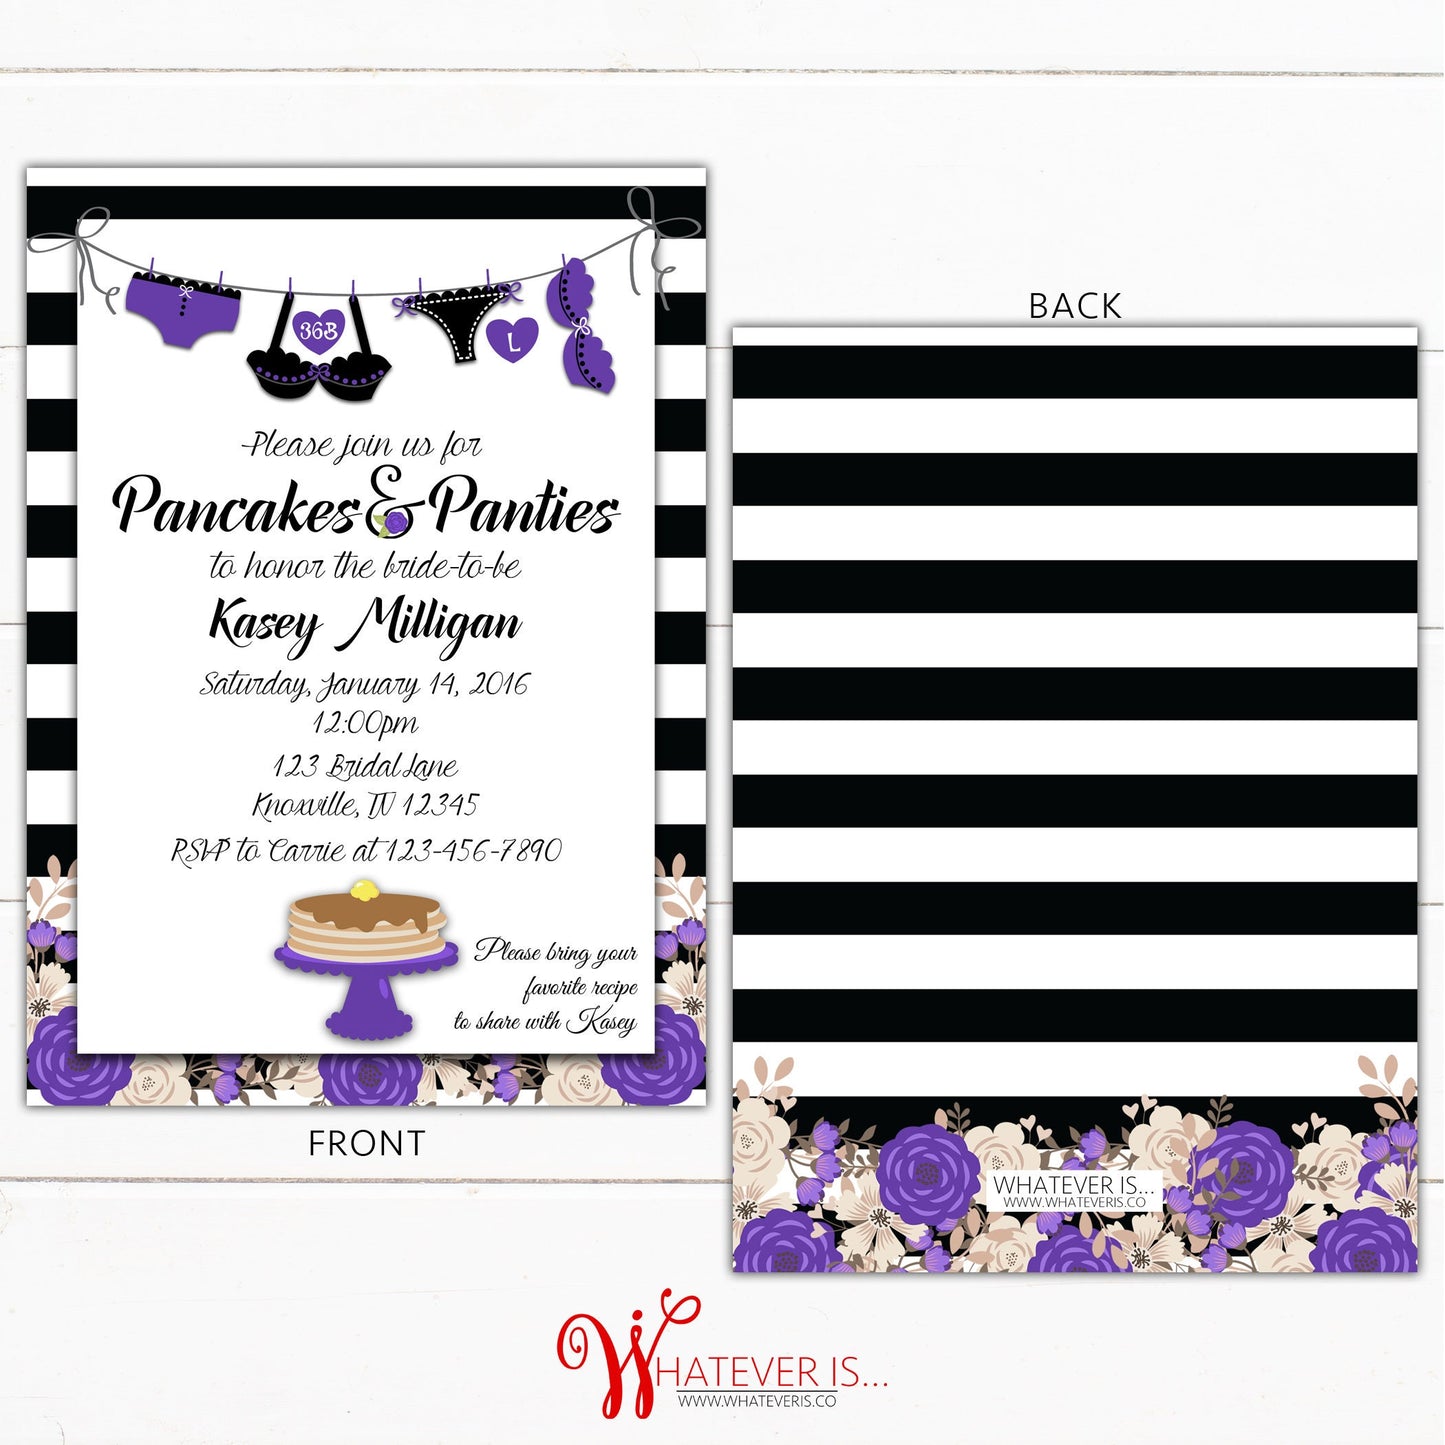 Pancakes and Panties Bridal Shower Lingerie Invitation | Purple Lingerie Bridal Shower | Pancakes and Panties | Floral Bridal Shower Invite